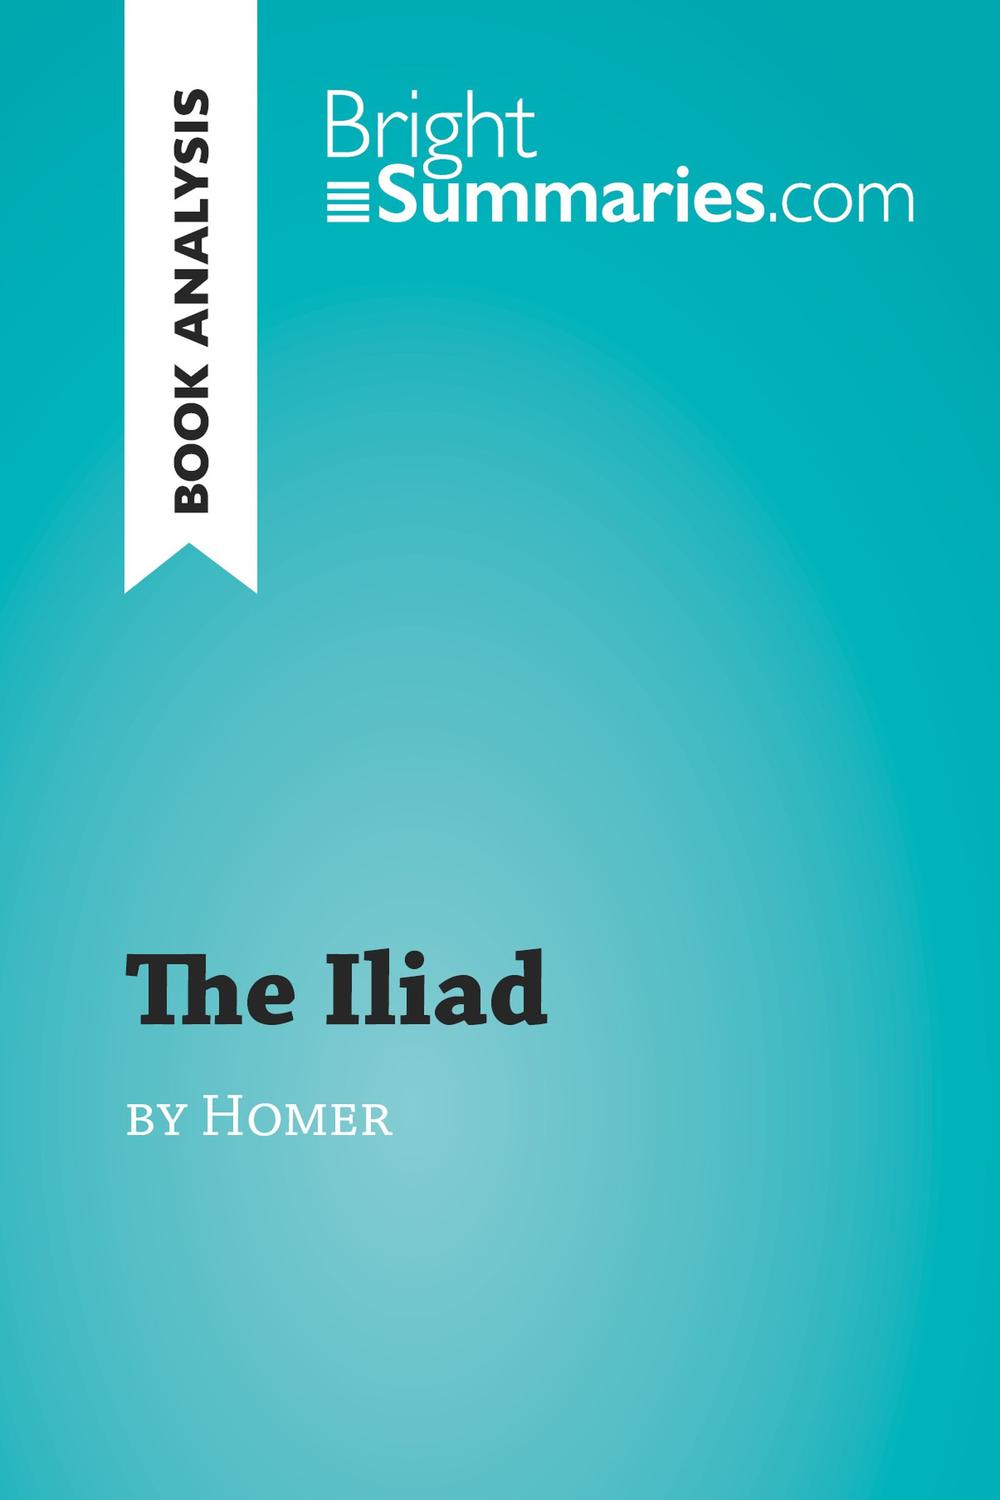 The Iliad by Homer (Book Analysis) - Bright Summaries